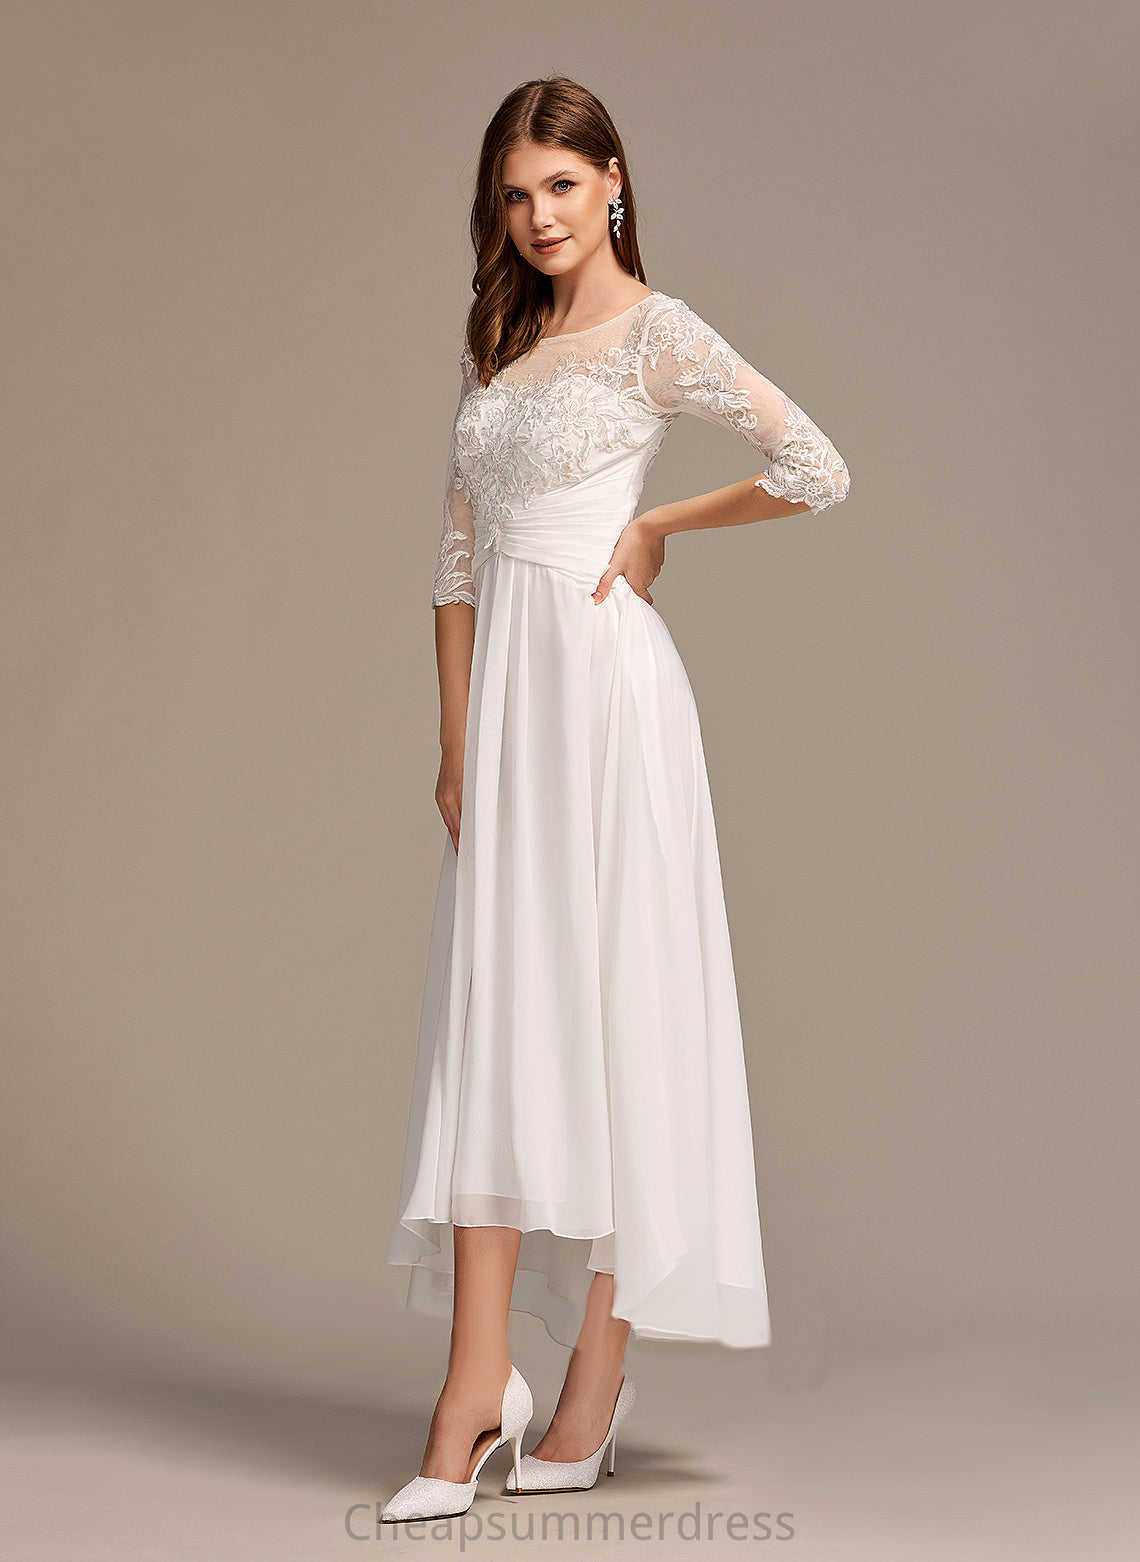 With Chiffon Illusion A-Line Wedding Cristina Wedding Dresses Dress Lace Asymmetrical